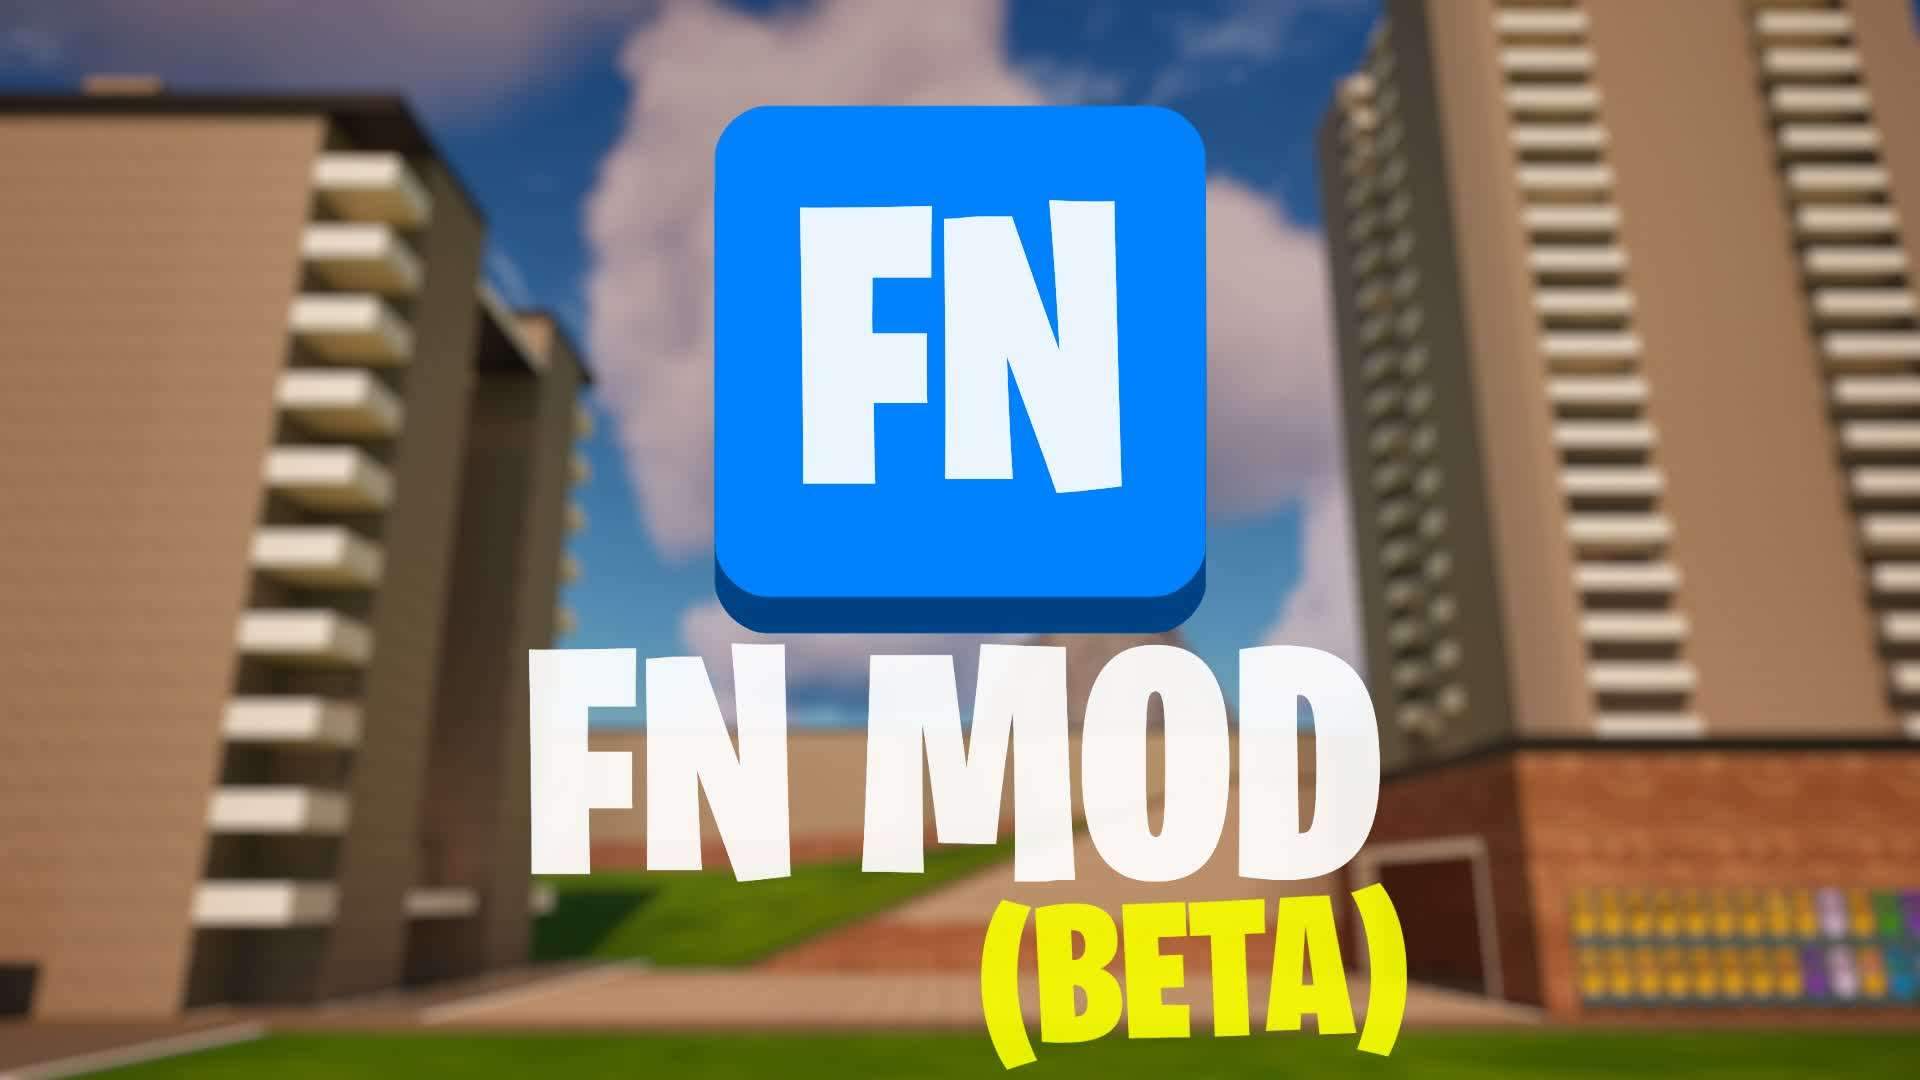 FN MOD (BETA)